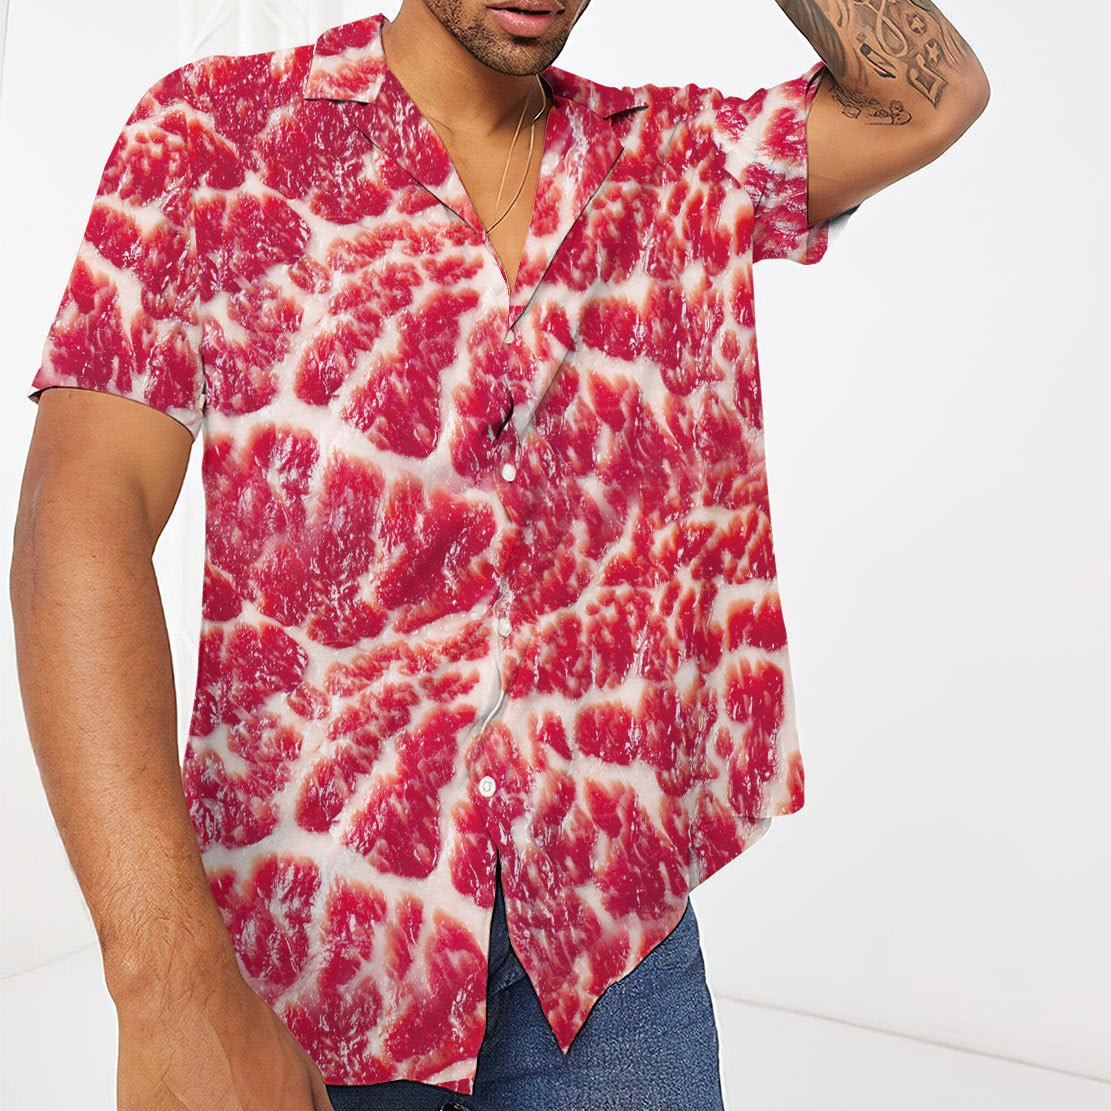 Raw Meat Hawaii Shirt